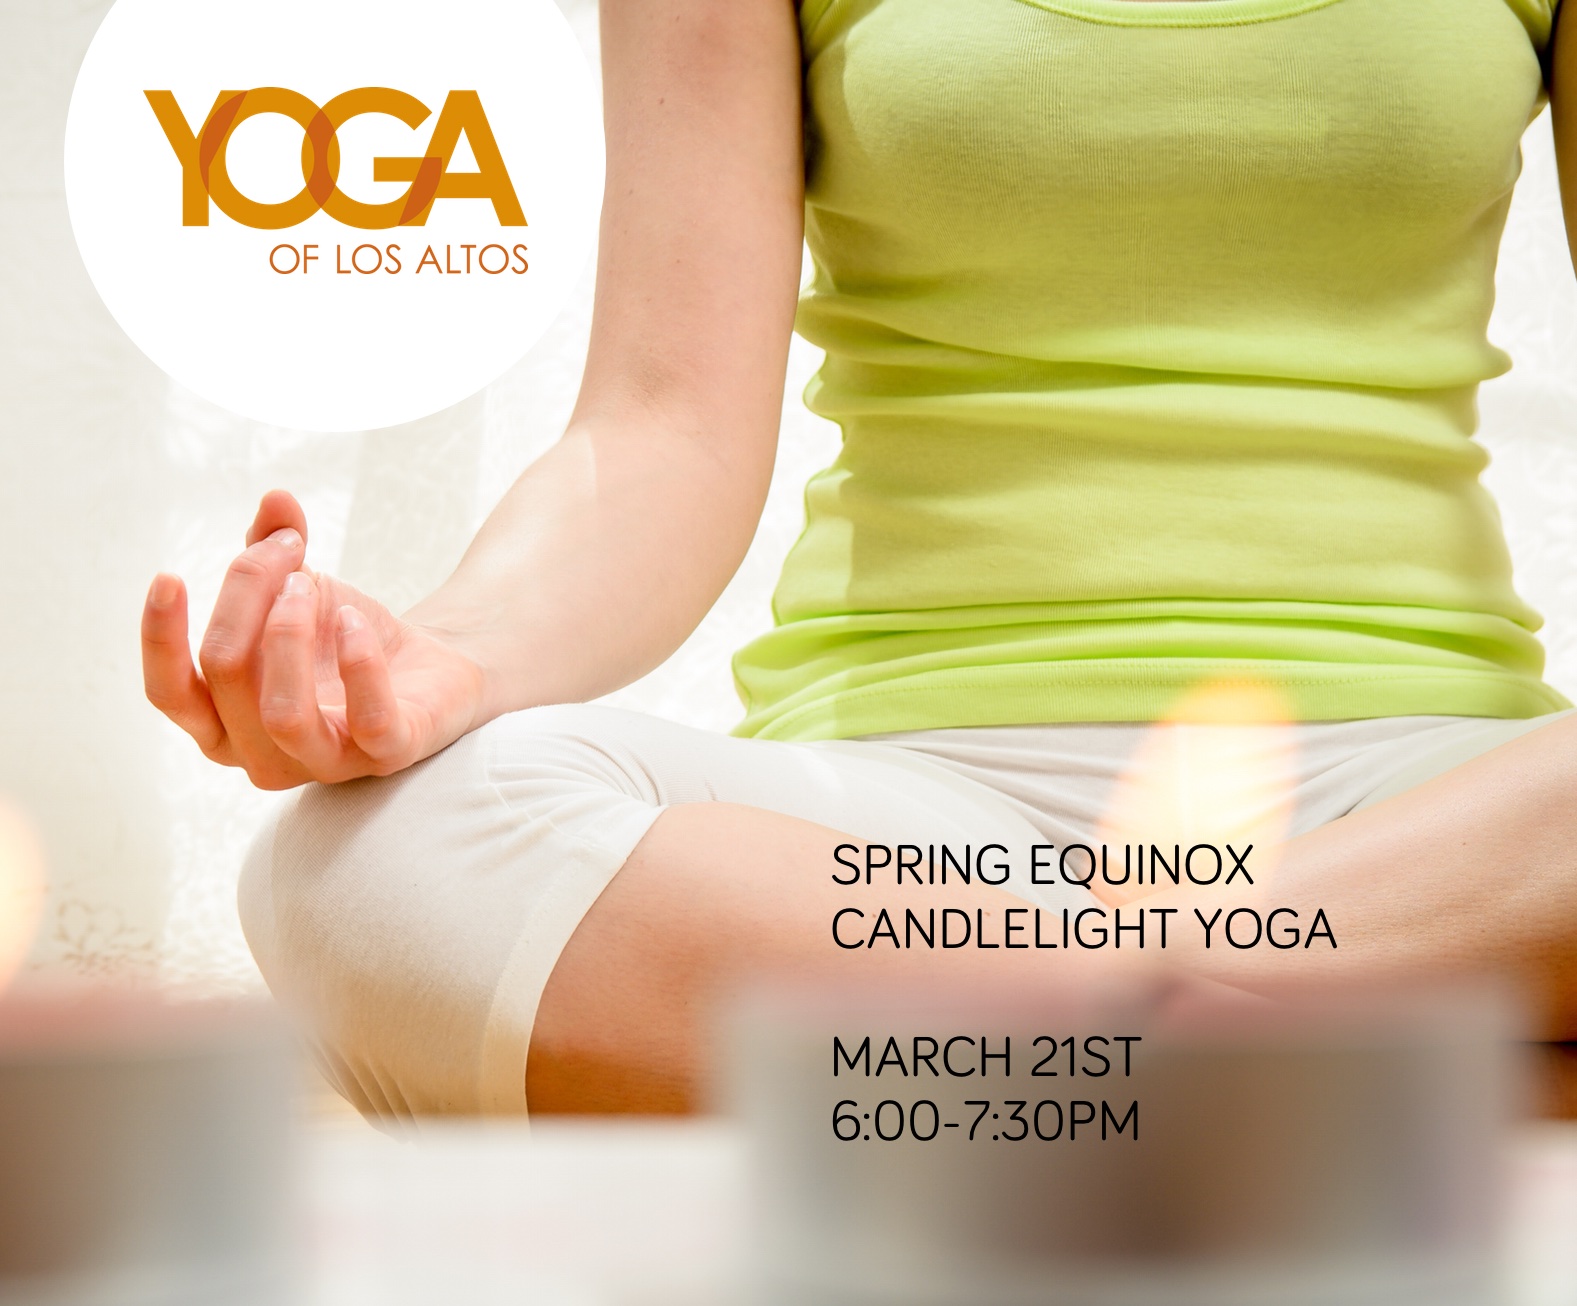 Yoga of Los Altos - Spring equinox candlelight yoga workshop with Rebecca Snowball